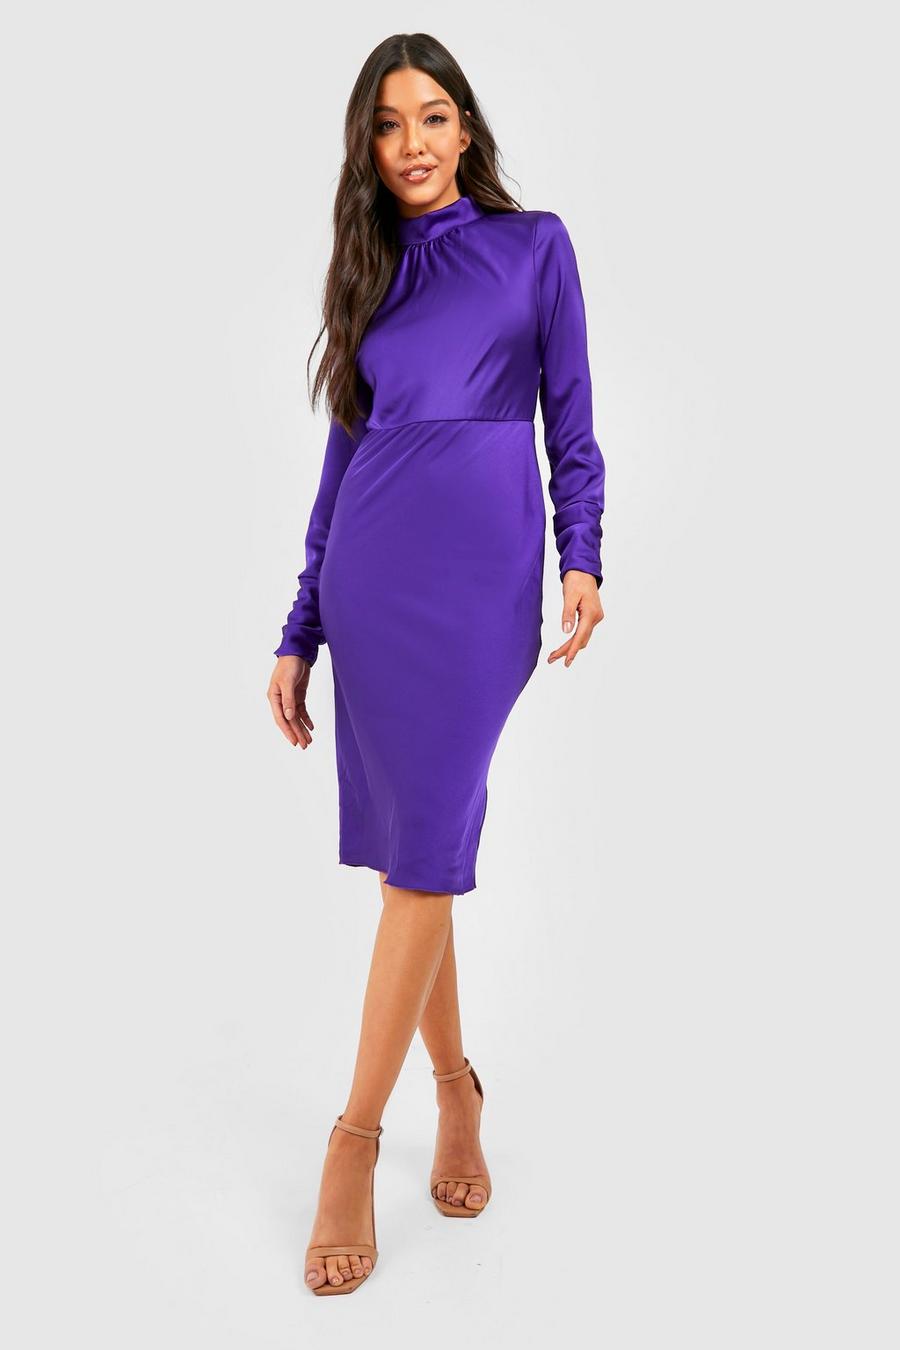 Jewel purple Satin Open Back High Neck Midi Dress image number 1